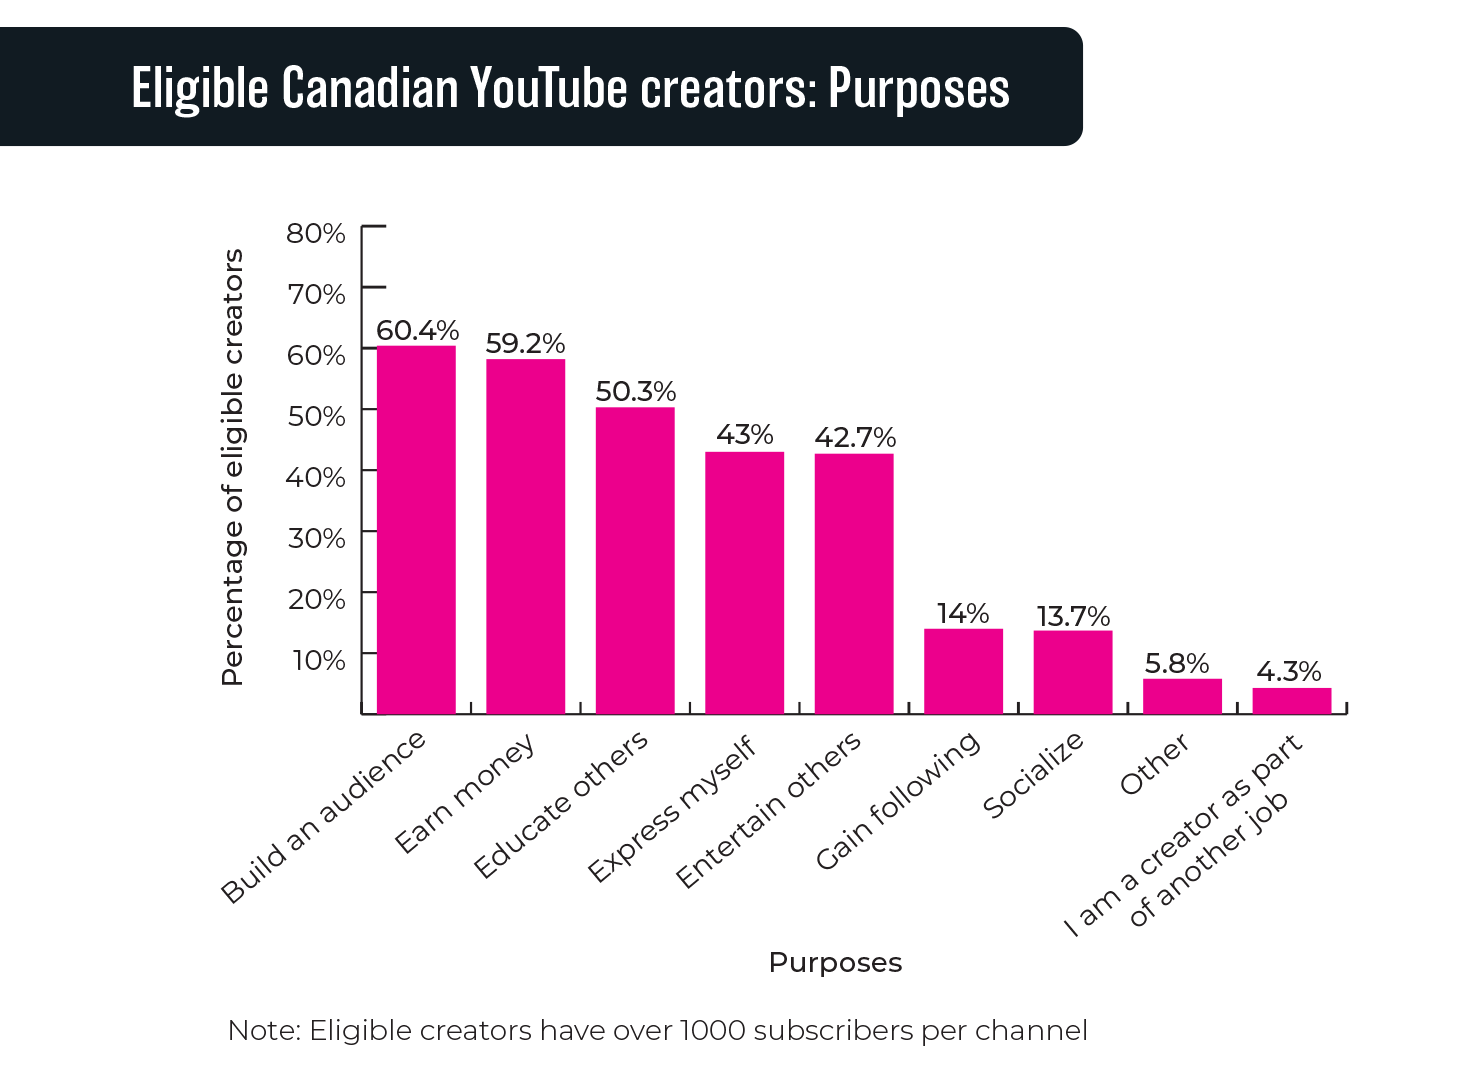 Figure 3.8: Eligible Canadian YouTube creators: Purposes